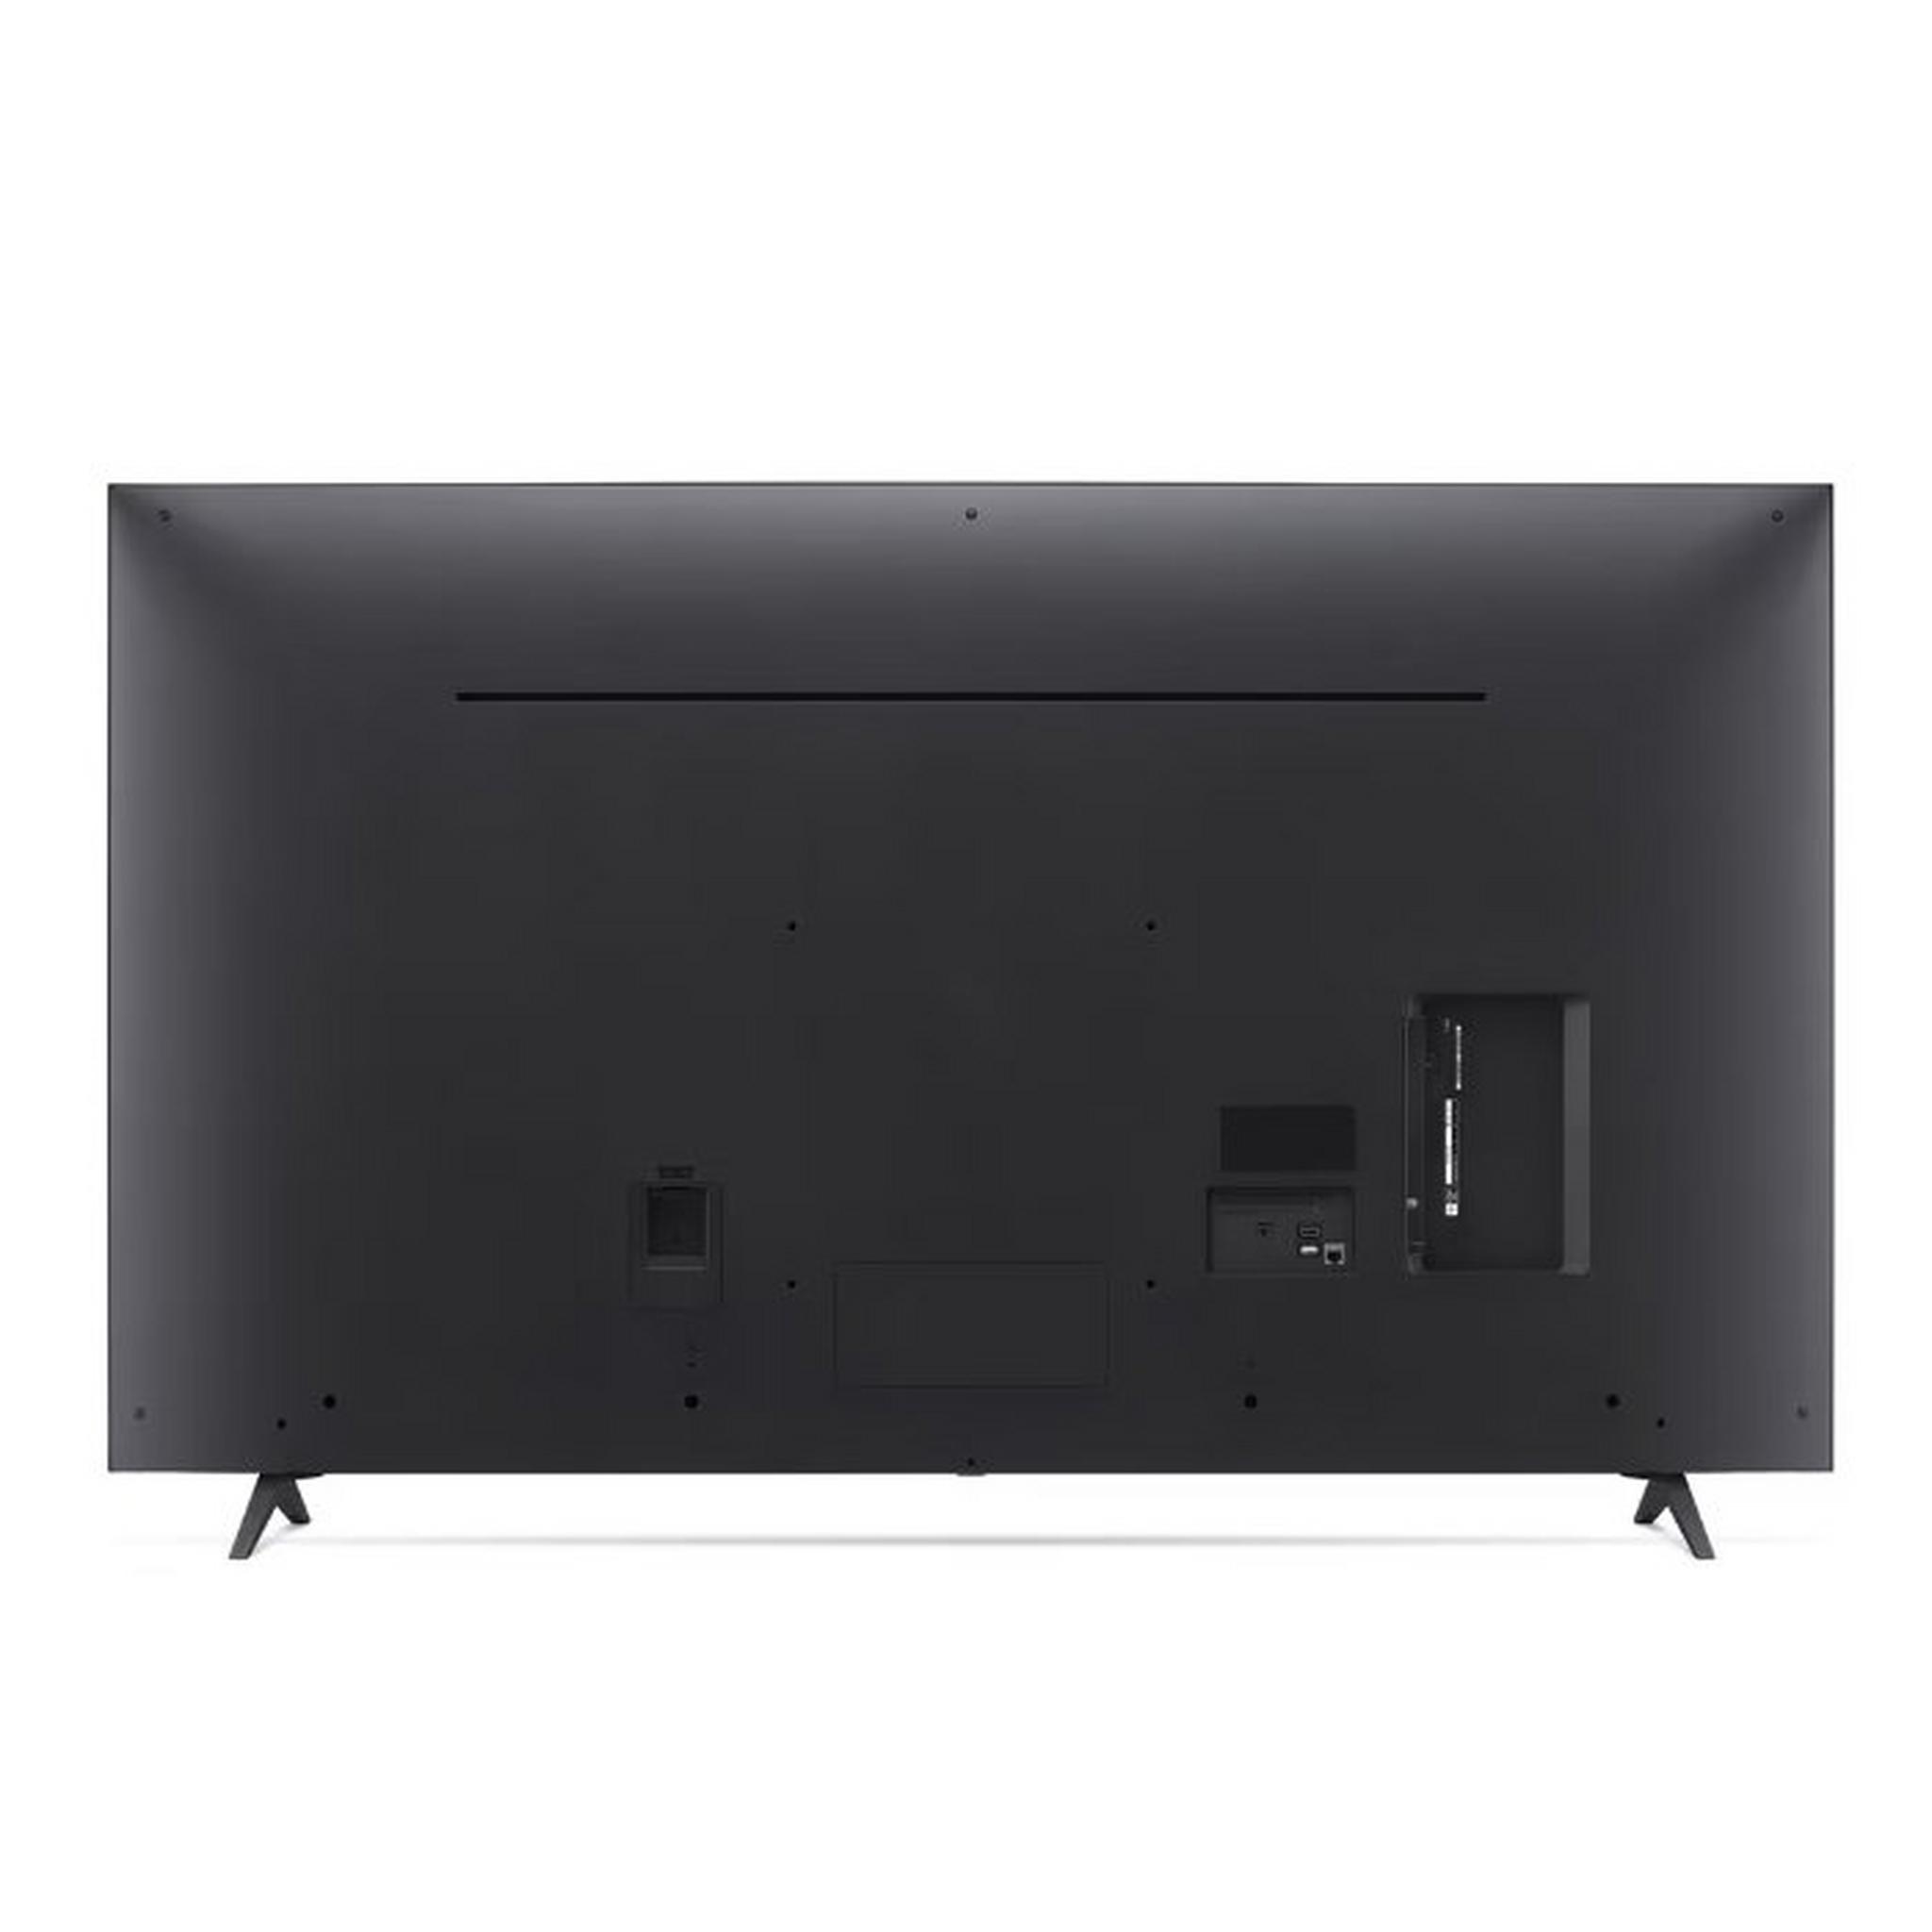 LG 55-inch Smart UHD LED TV, 55UR80006LJ – Black